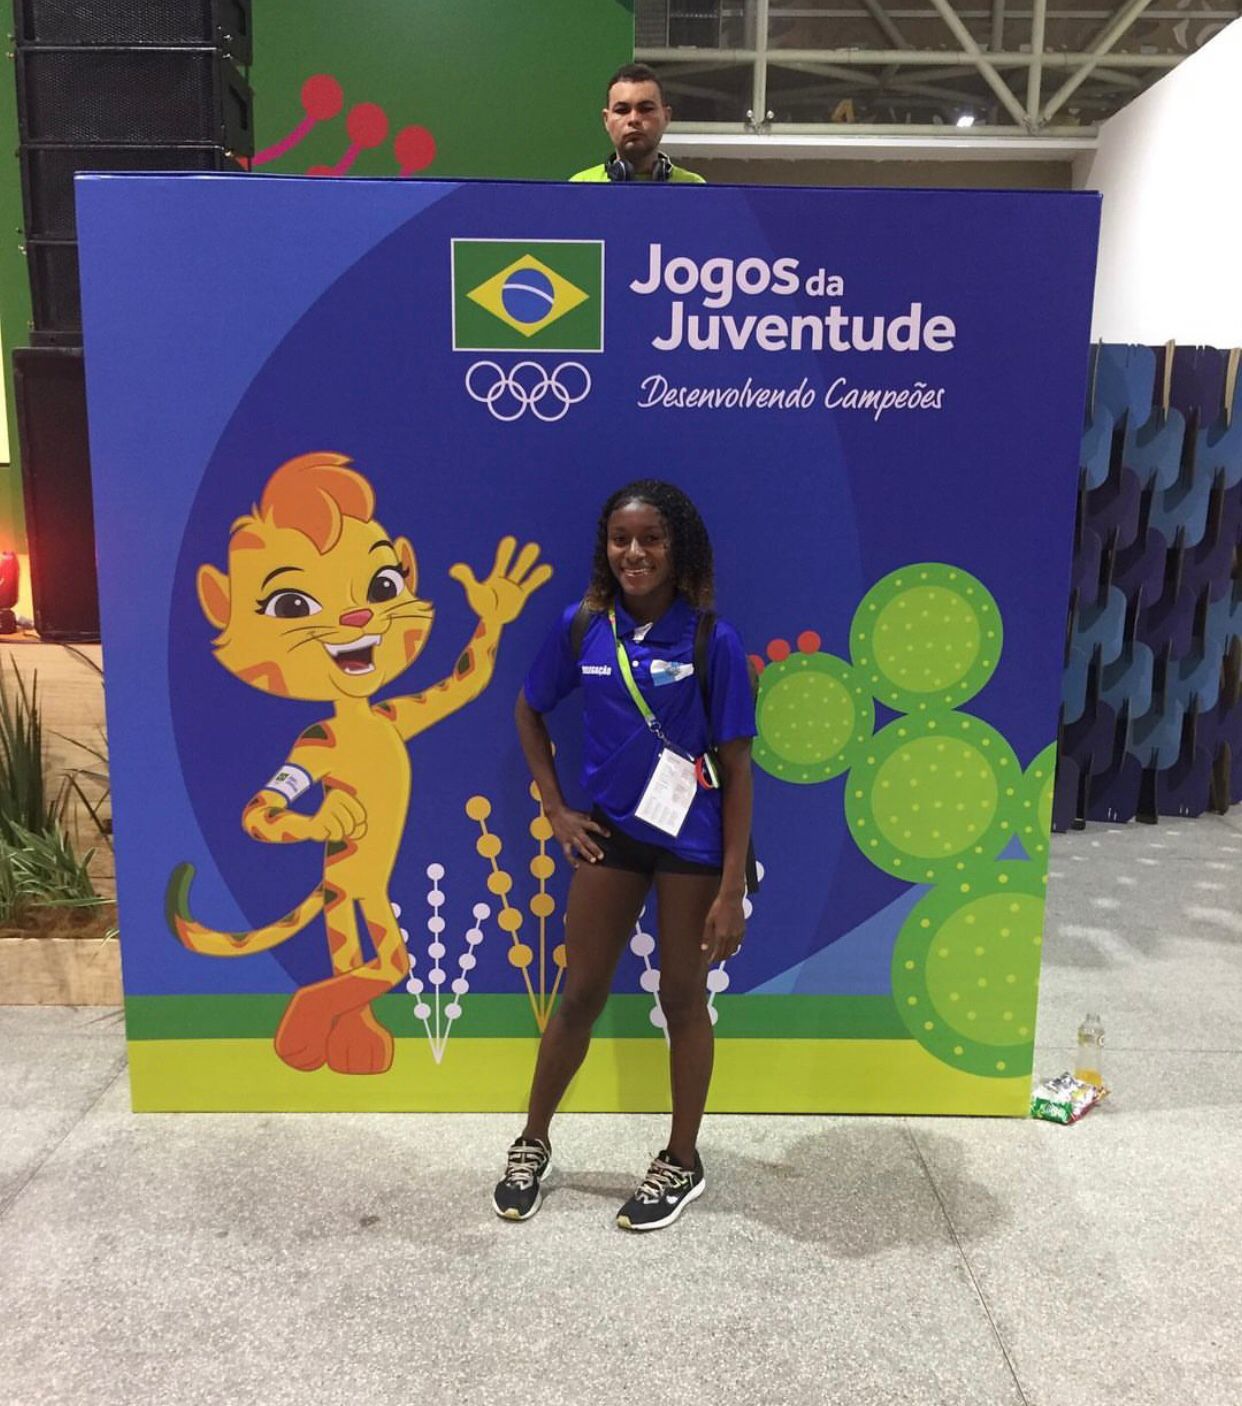 Grand Hyatt RJ e o sonho de uma atleta brasileira